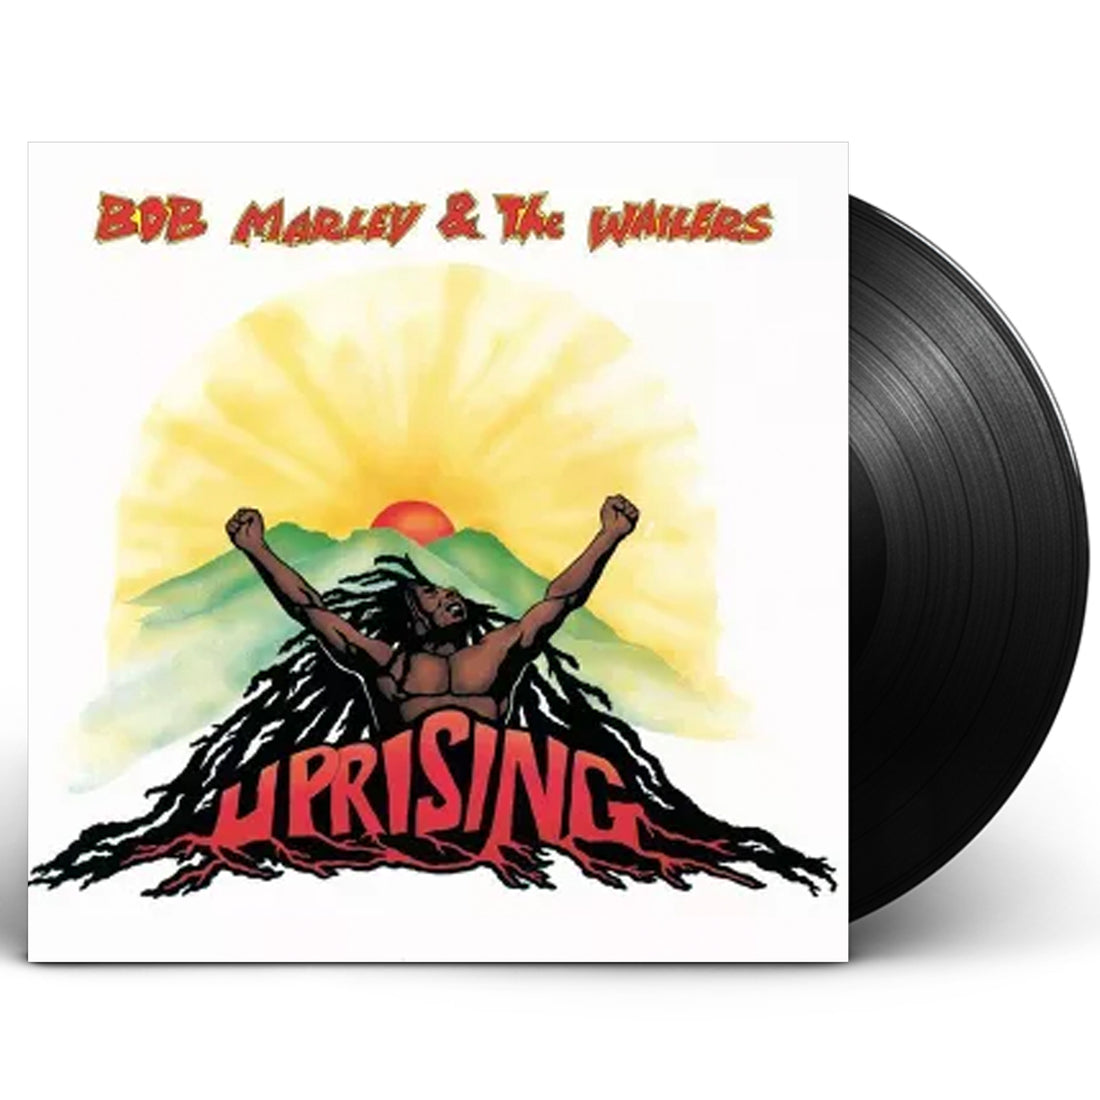 Bob Marley & The Wailers "Uprising" Half-Speed Master LP Vinyl